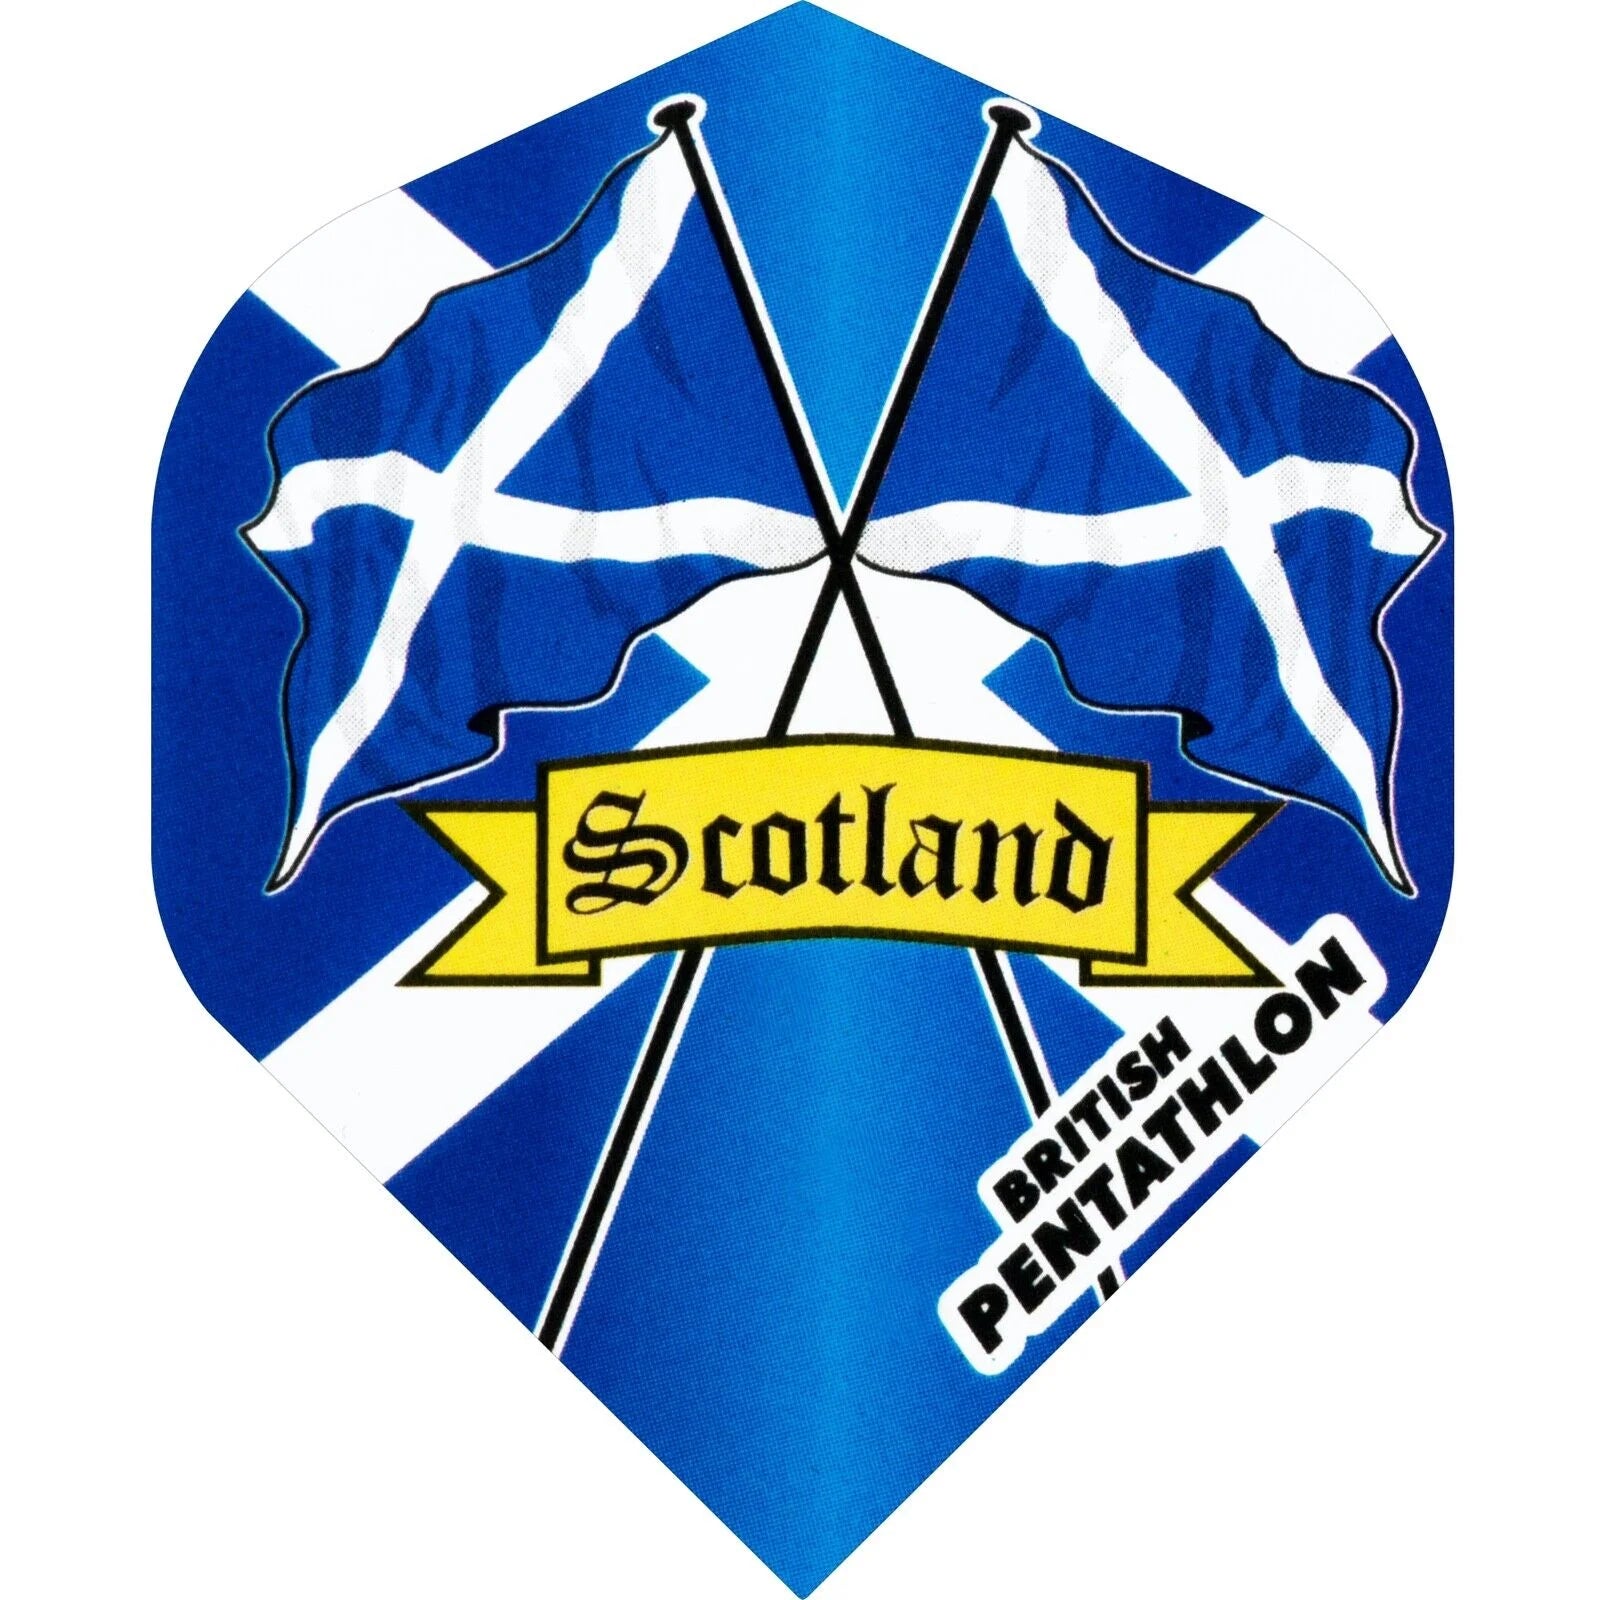 British Pentathlon Dartflight Scotland No2 100 Micron